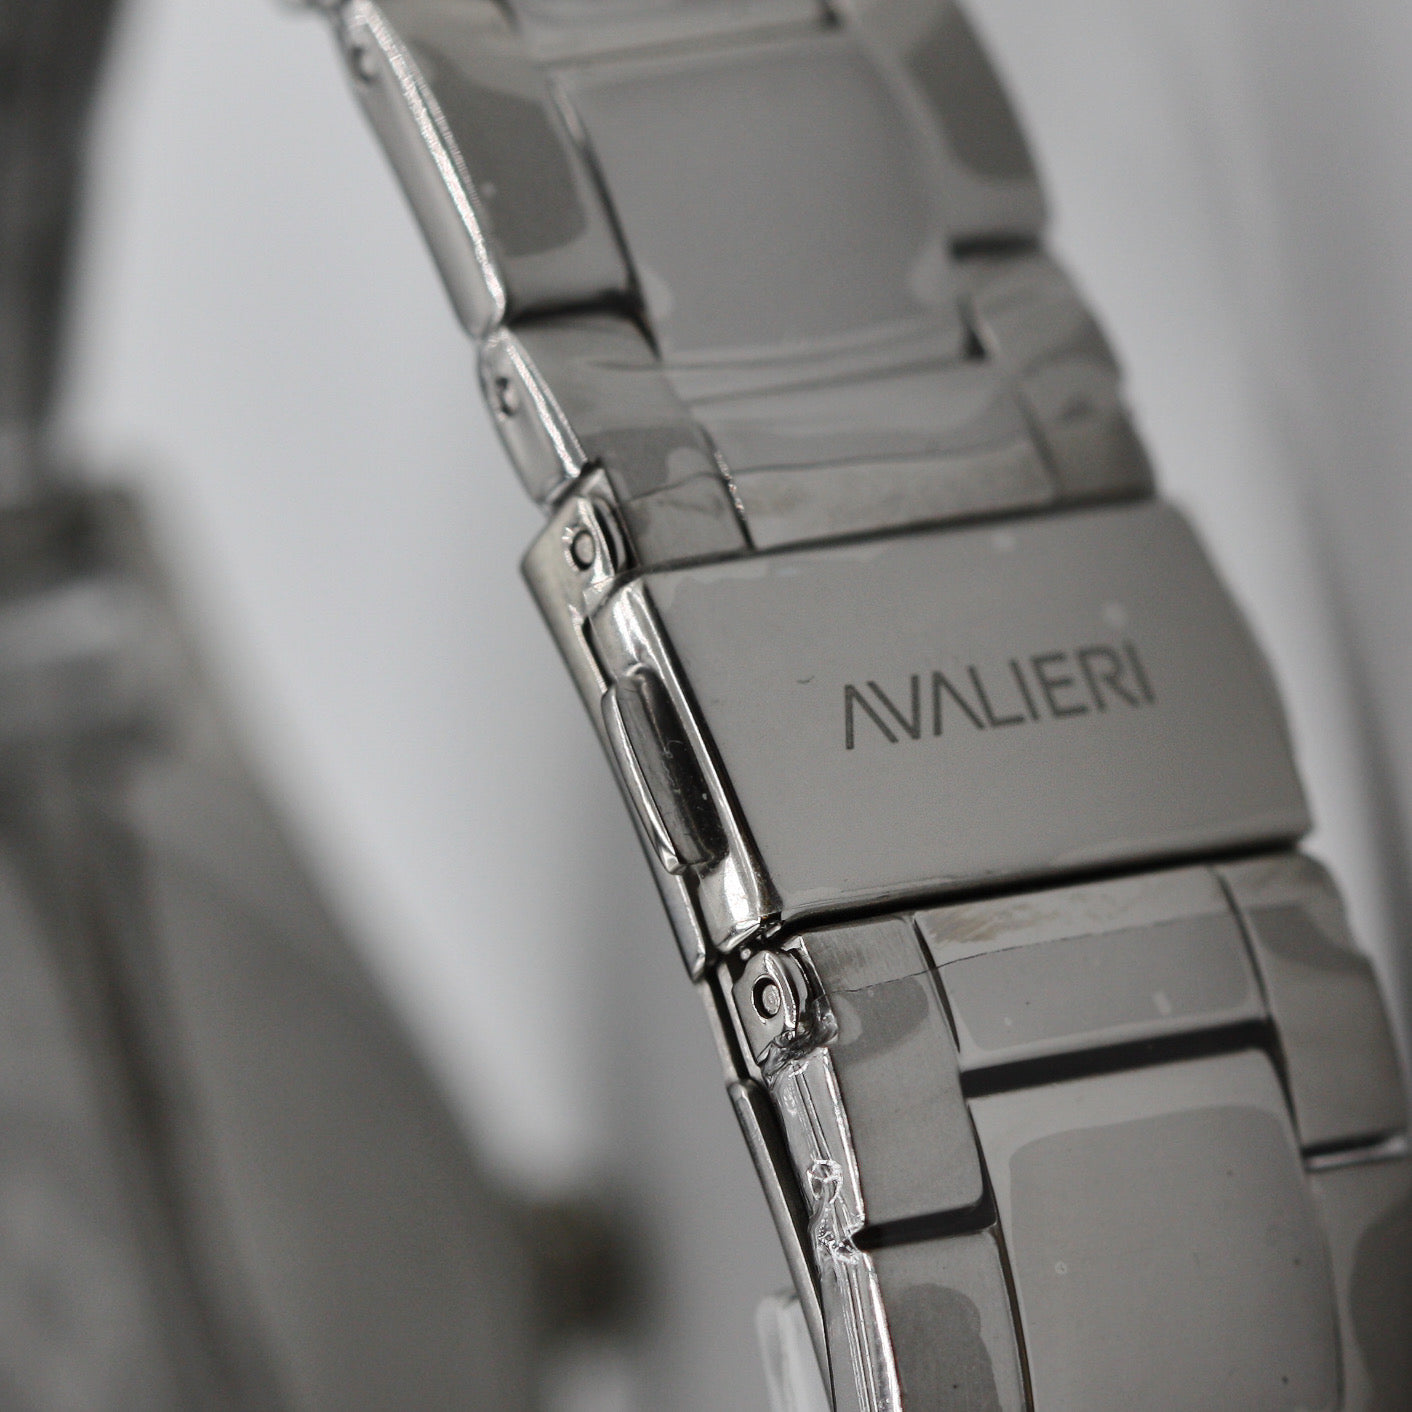 Avalieri Men's Quartz Watch Yellow Dial - AV-2581B